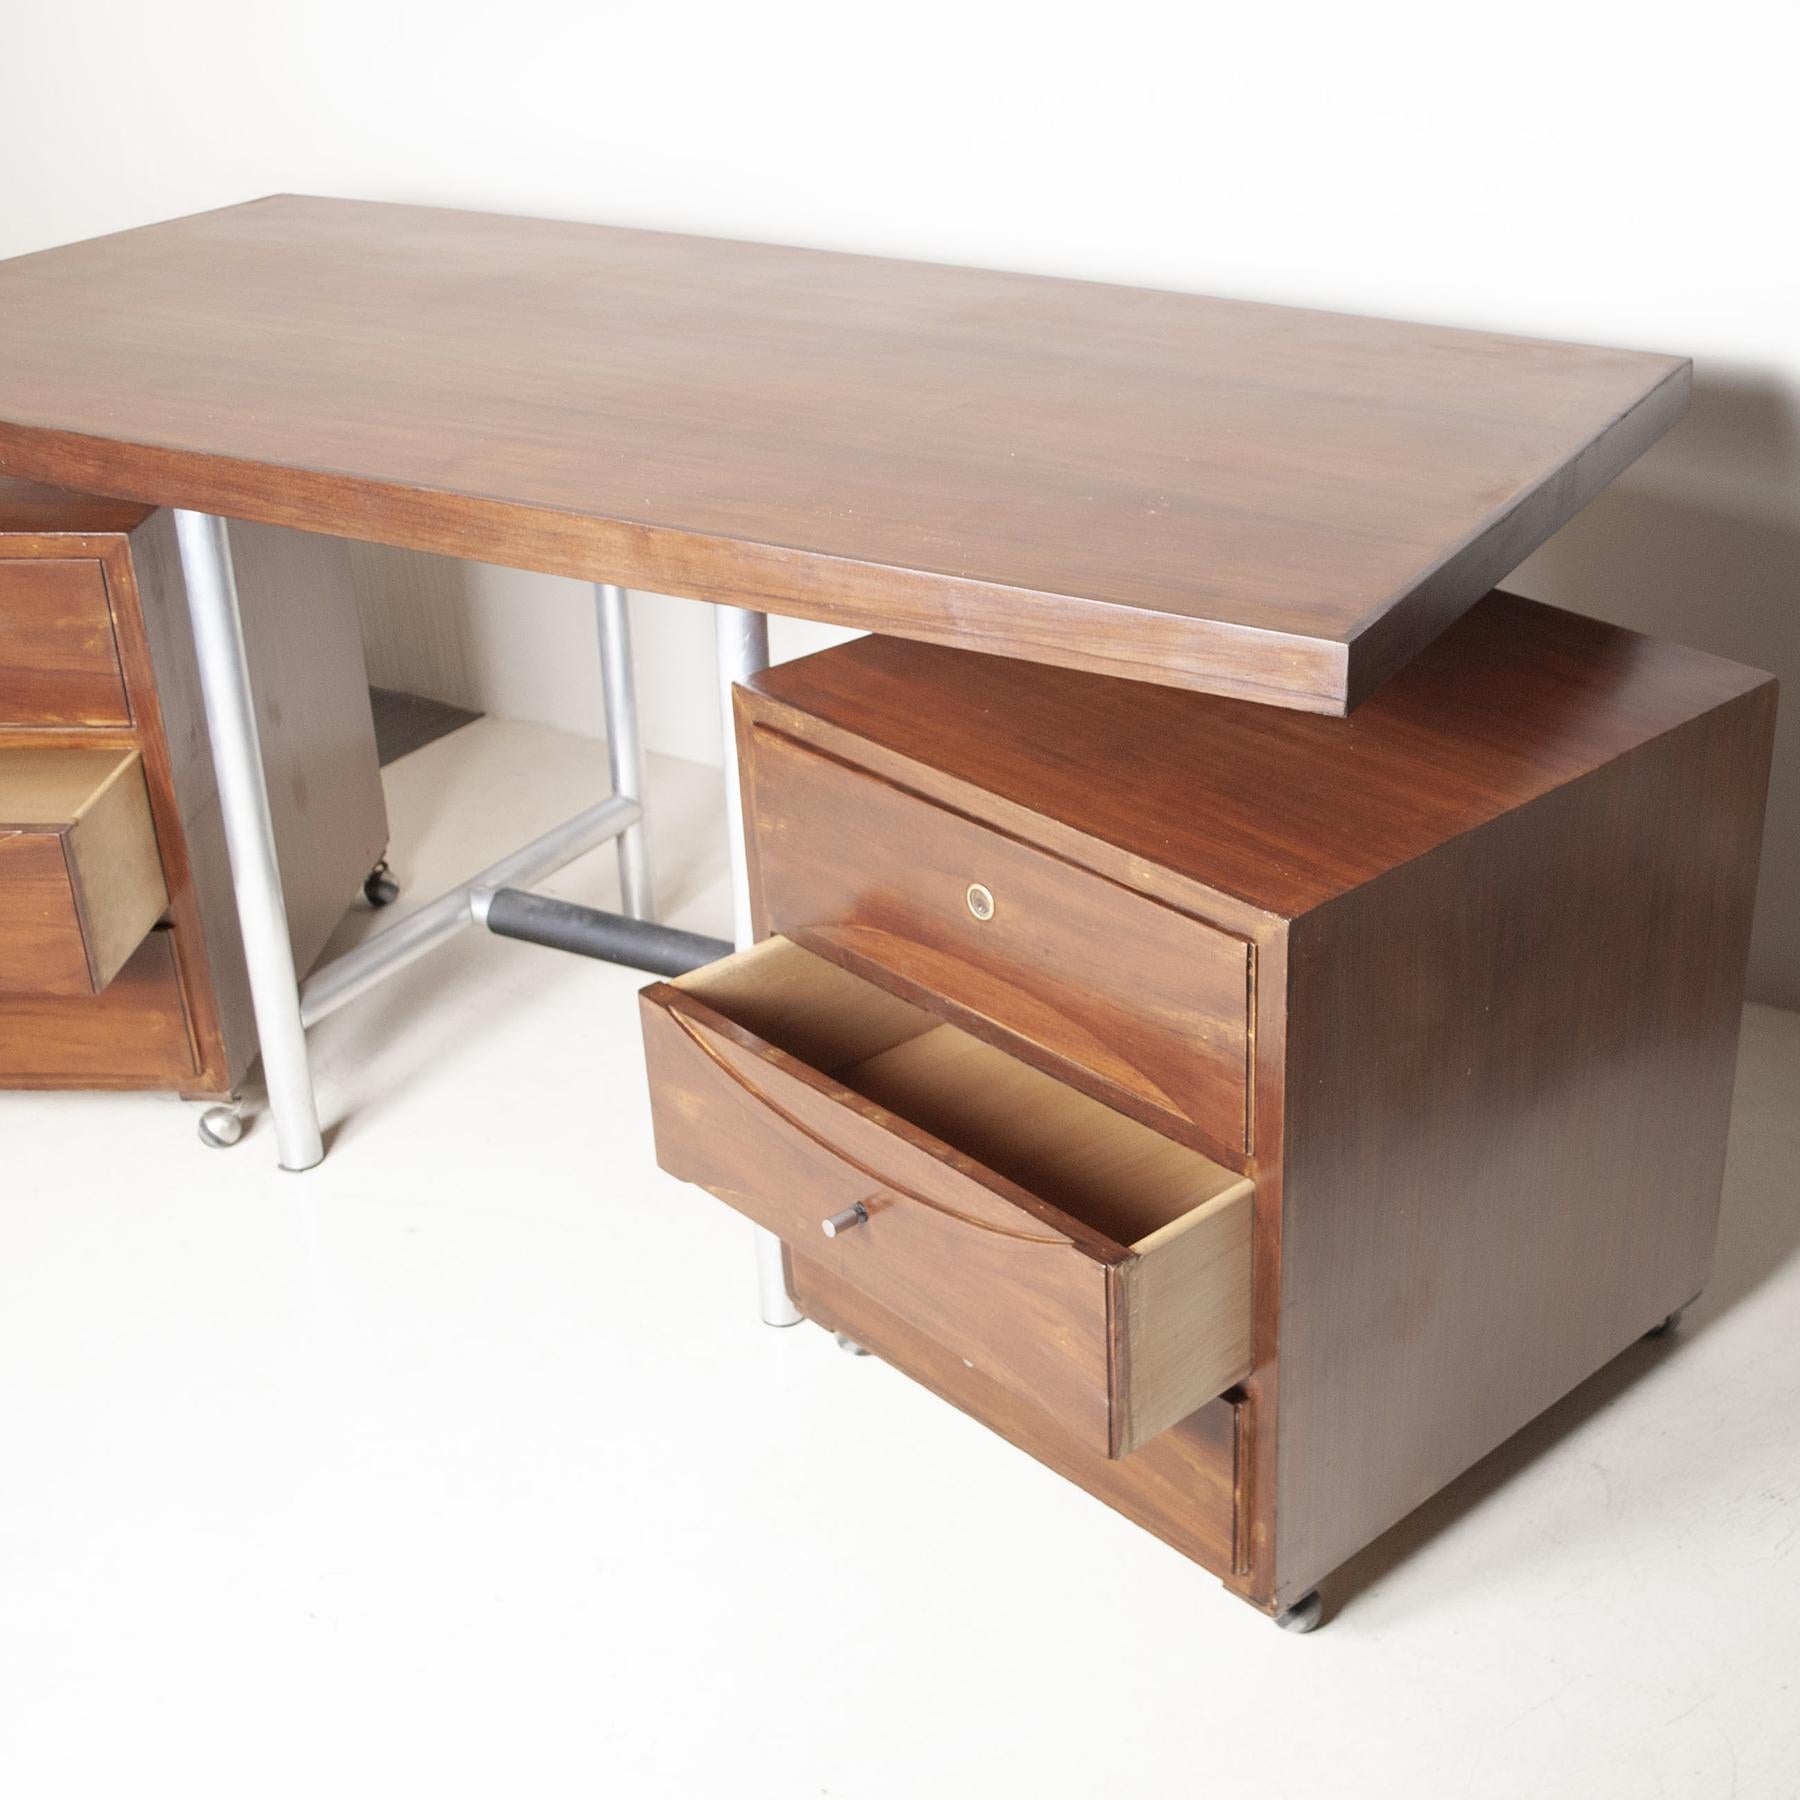 Italian Mid-Century Walnut Desk from the Sixties For Sale 3